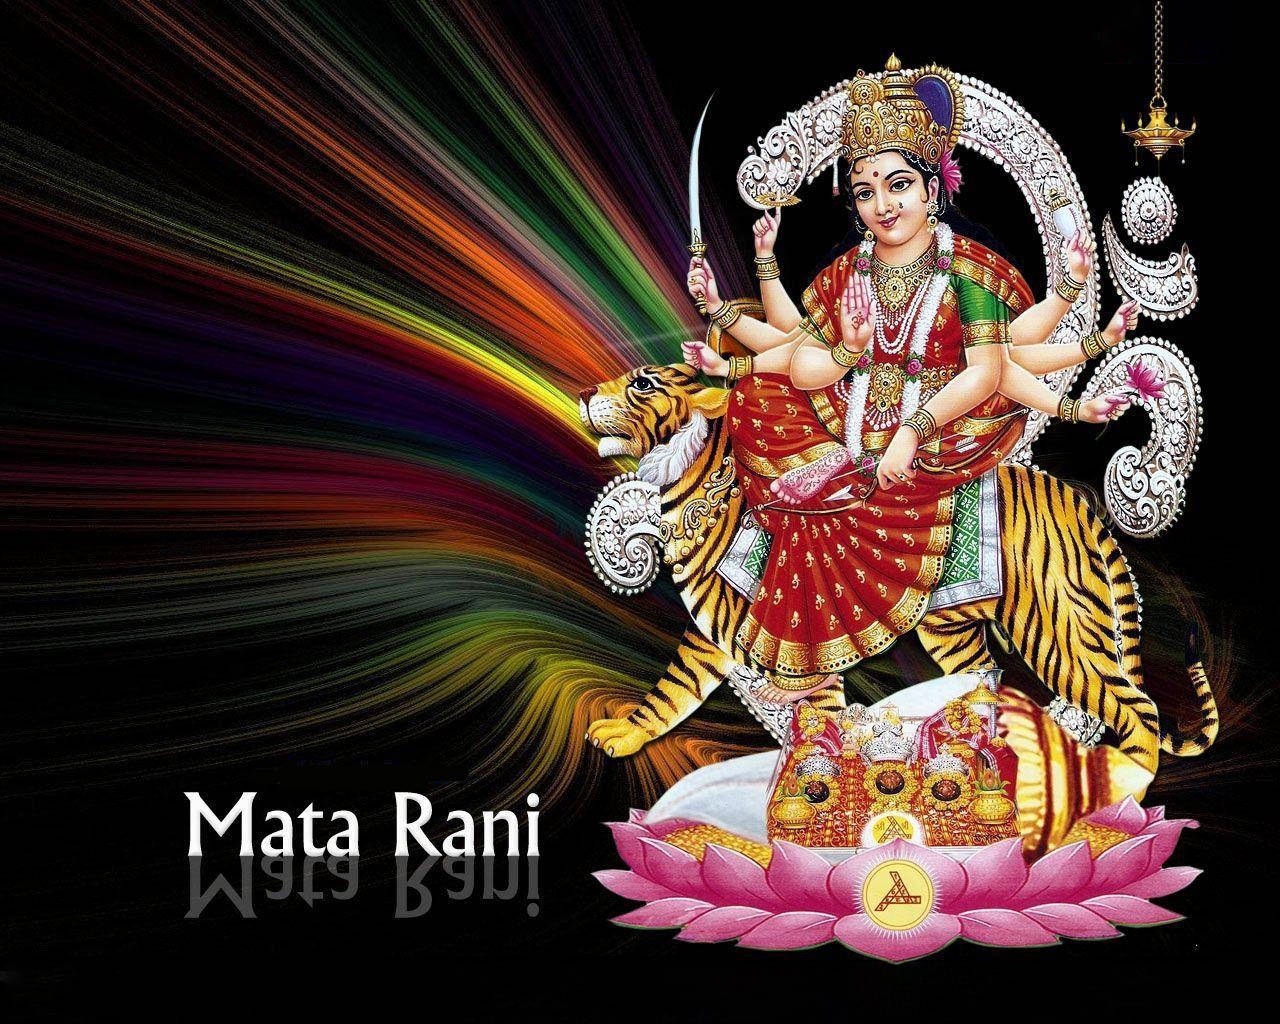 100+] Mata Rani Wallpapers for FREE | Wallpapers.com